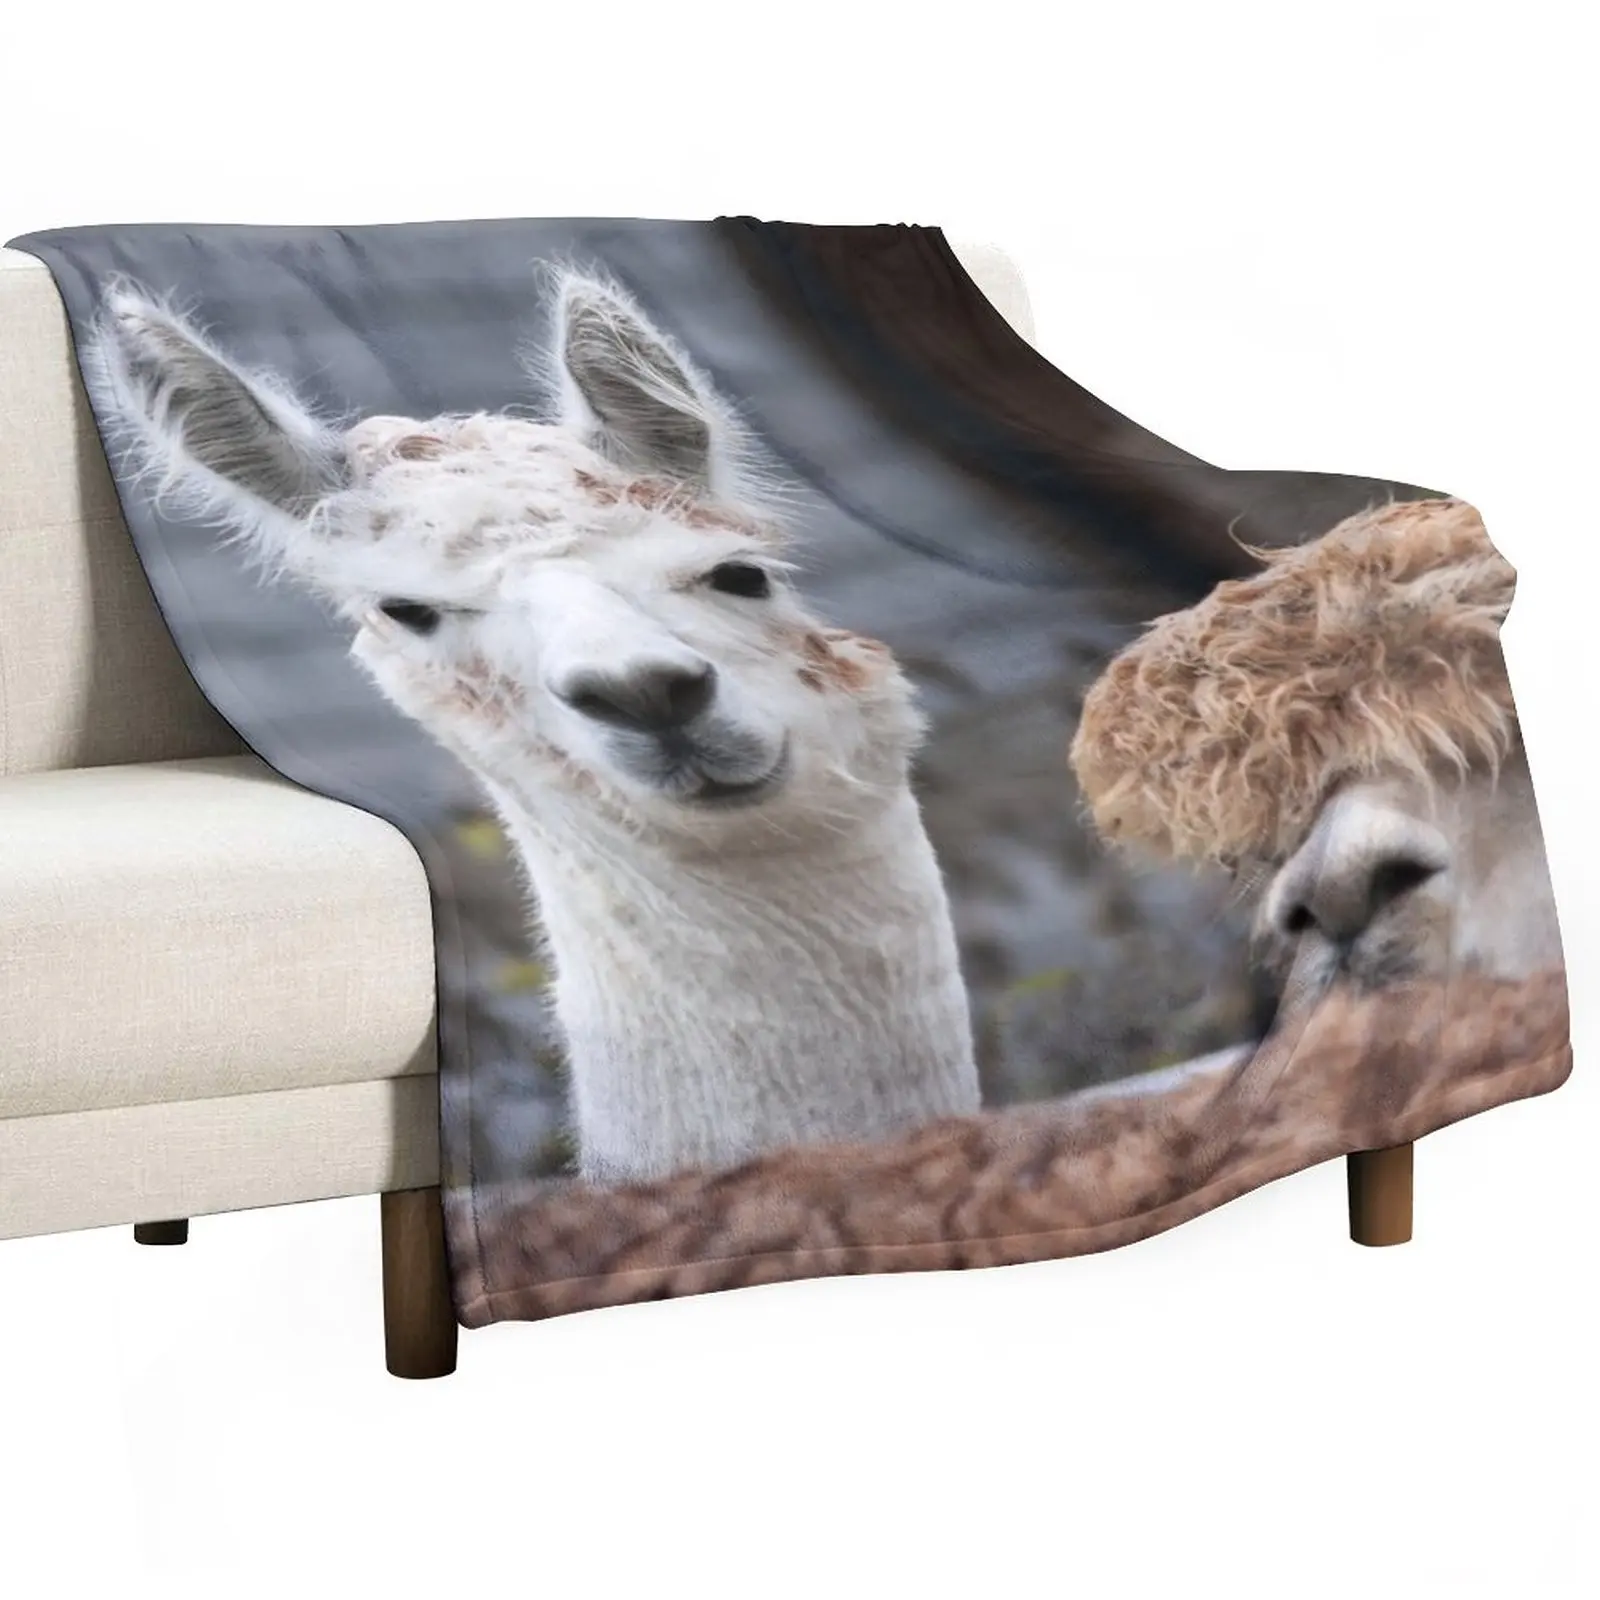 

Curious alpacas cute animals Throw Blanket Fluffy Soft Blankets Hairy Blanket Thin Blankets